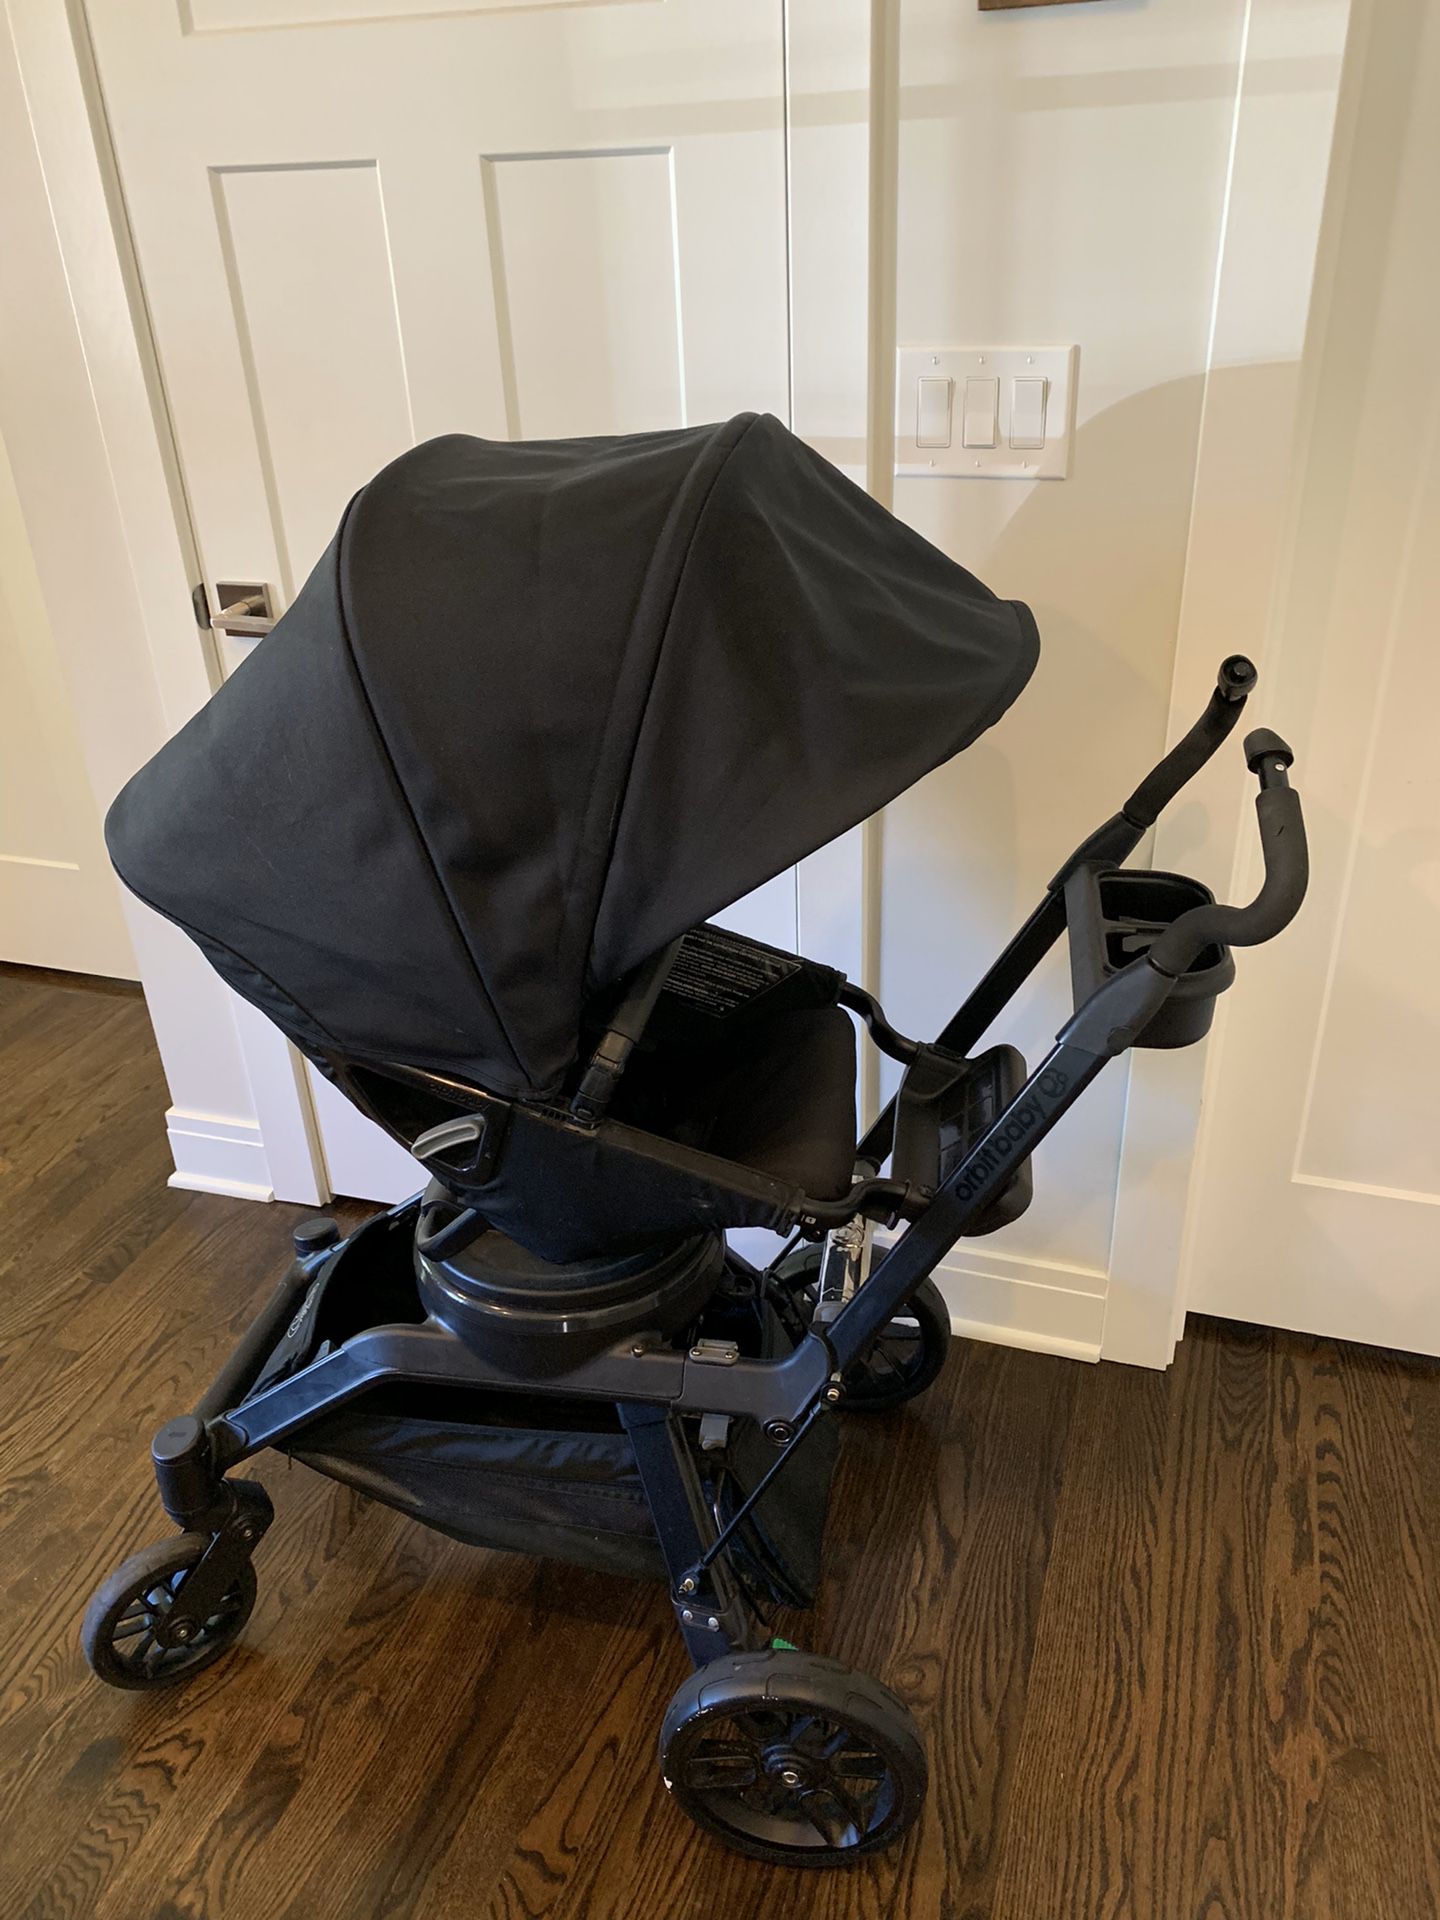 Orbit baby G3 stroller and toddler car seat